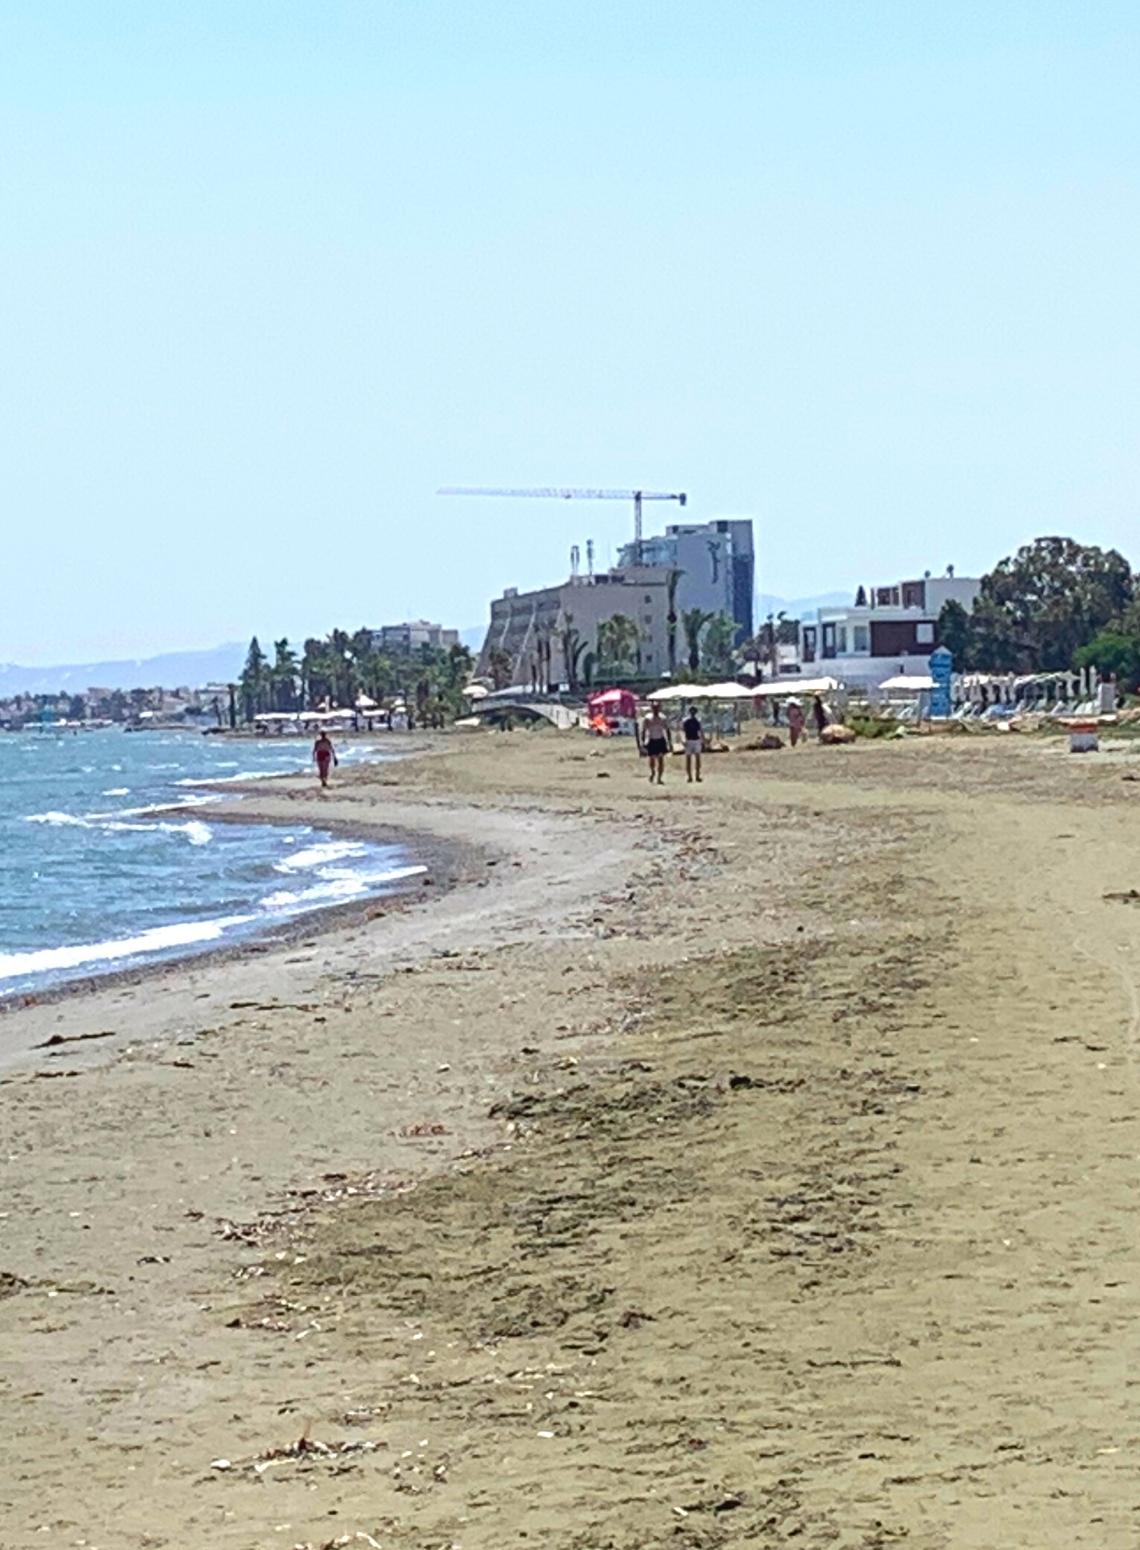 Yiannathes Beach in Cyprus